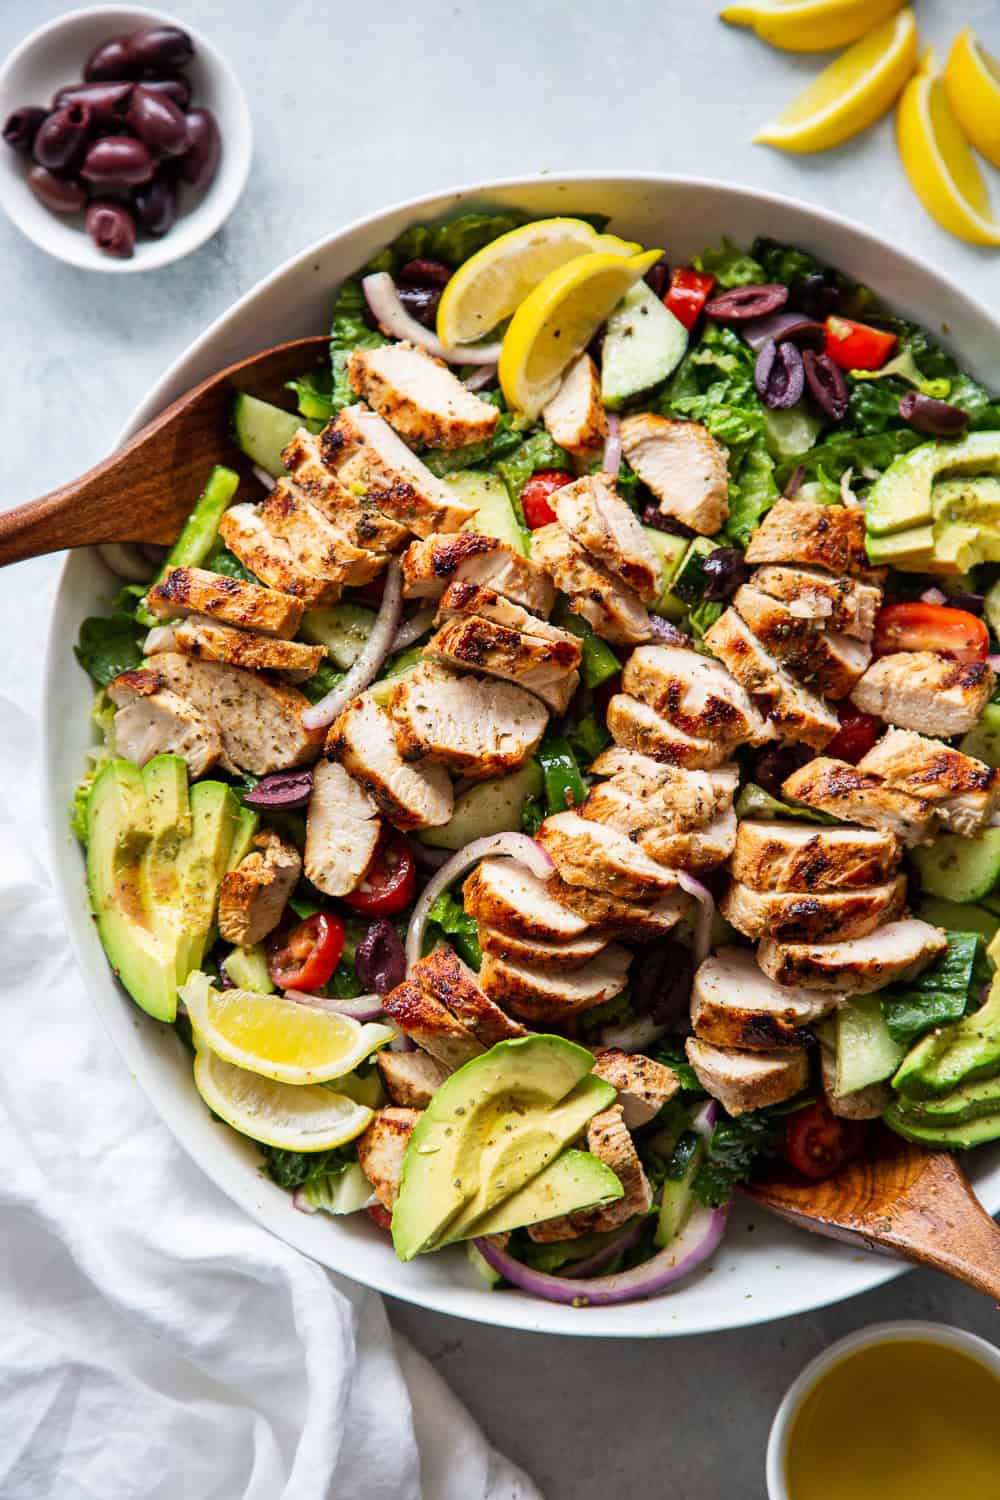 https://www.paleorunningmomma.com/wp-content/uploads/2021/03/greek-chicken-salad-3.jpg